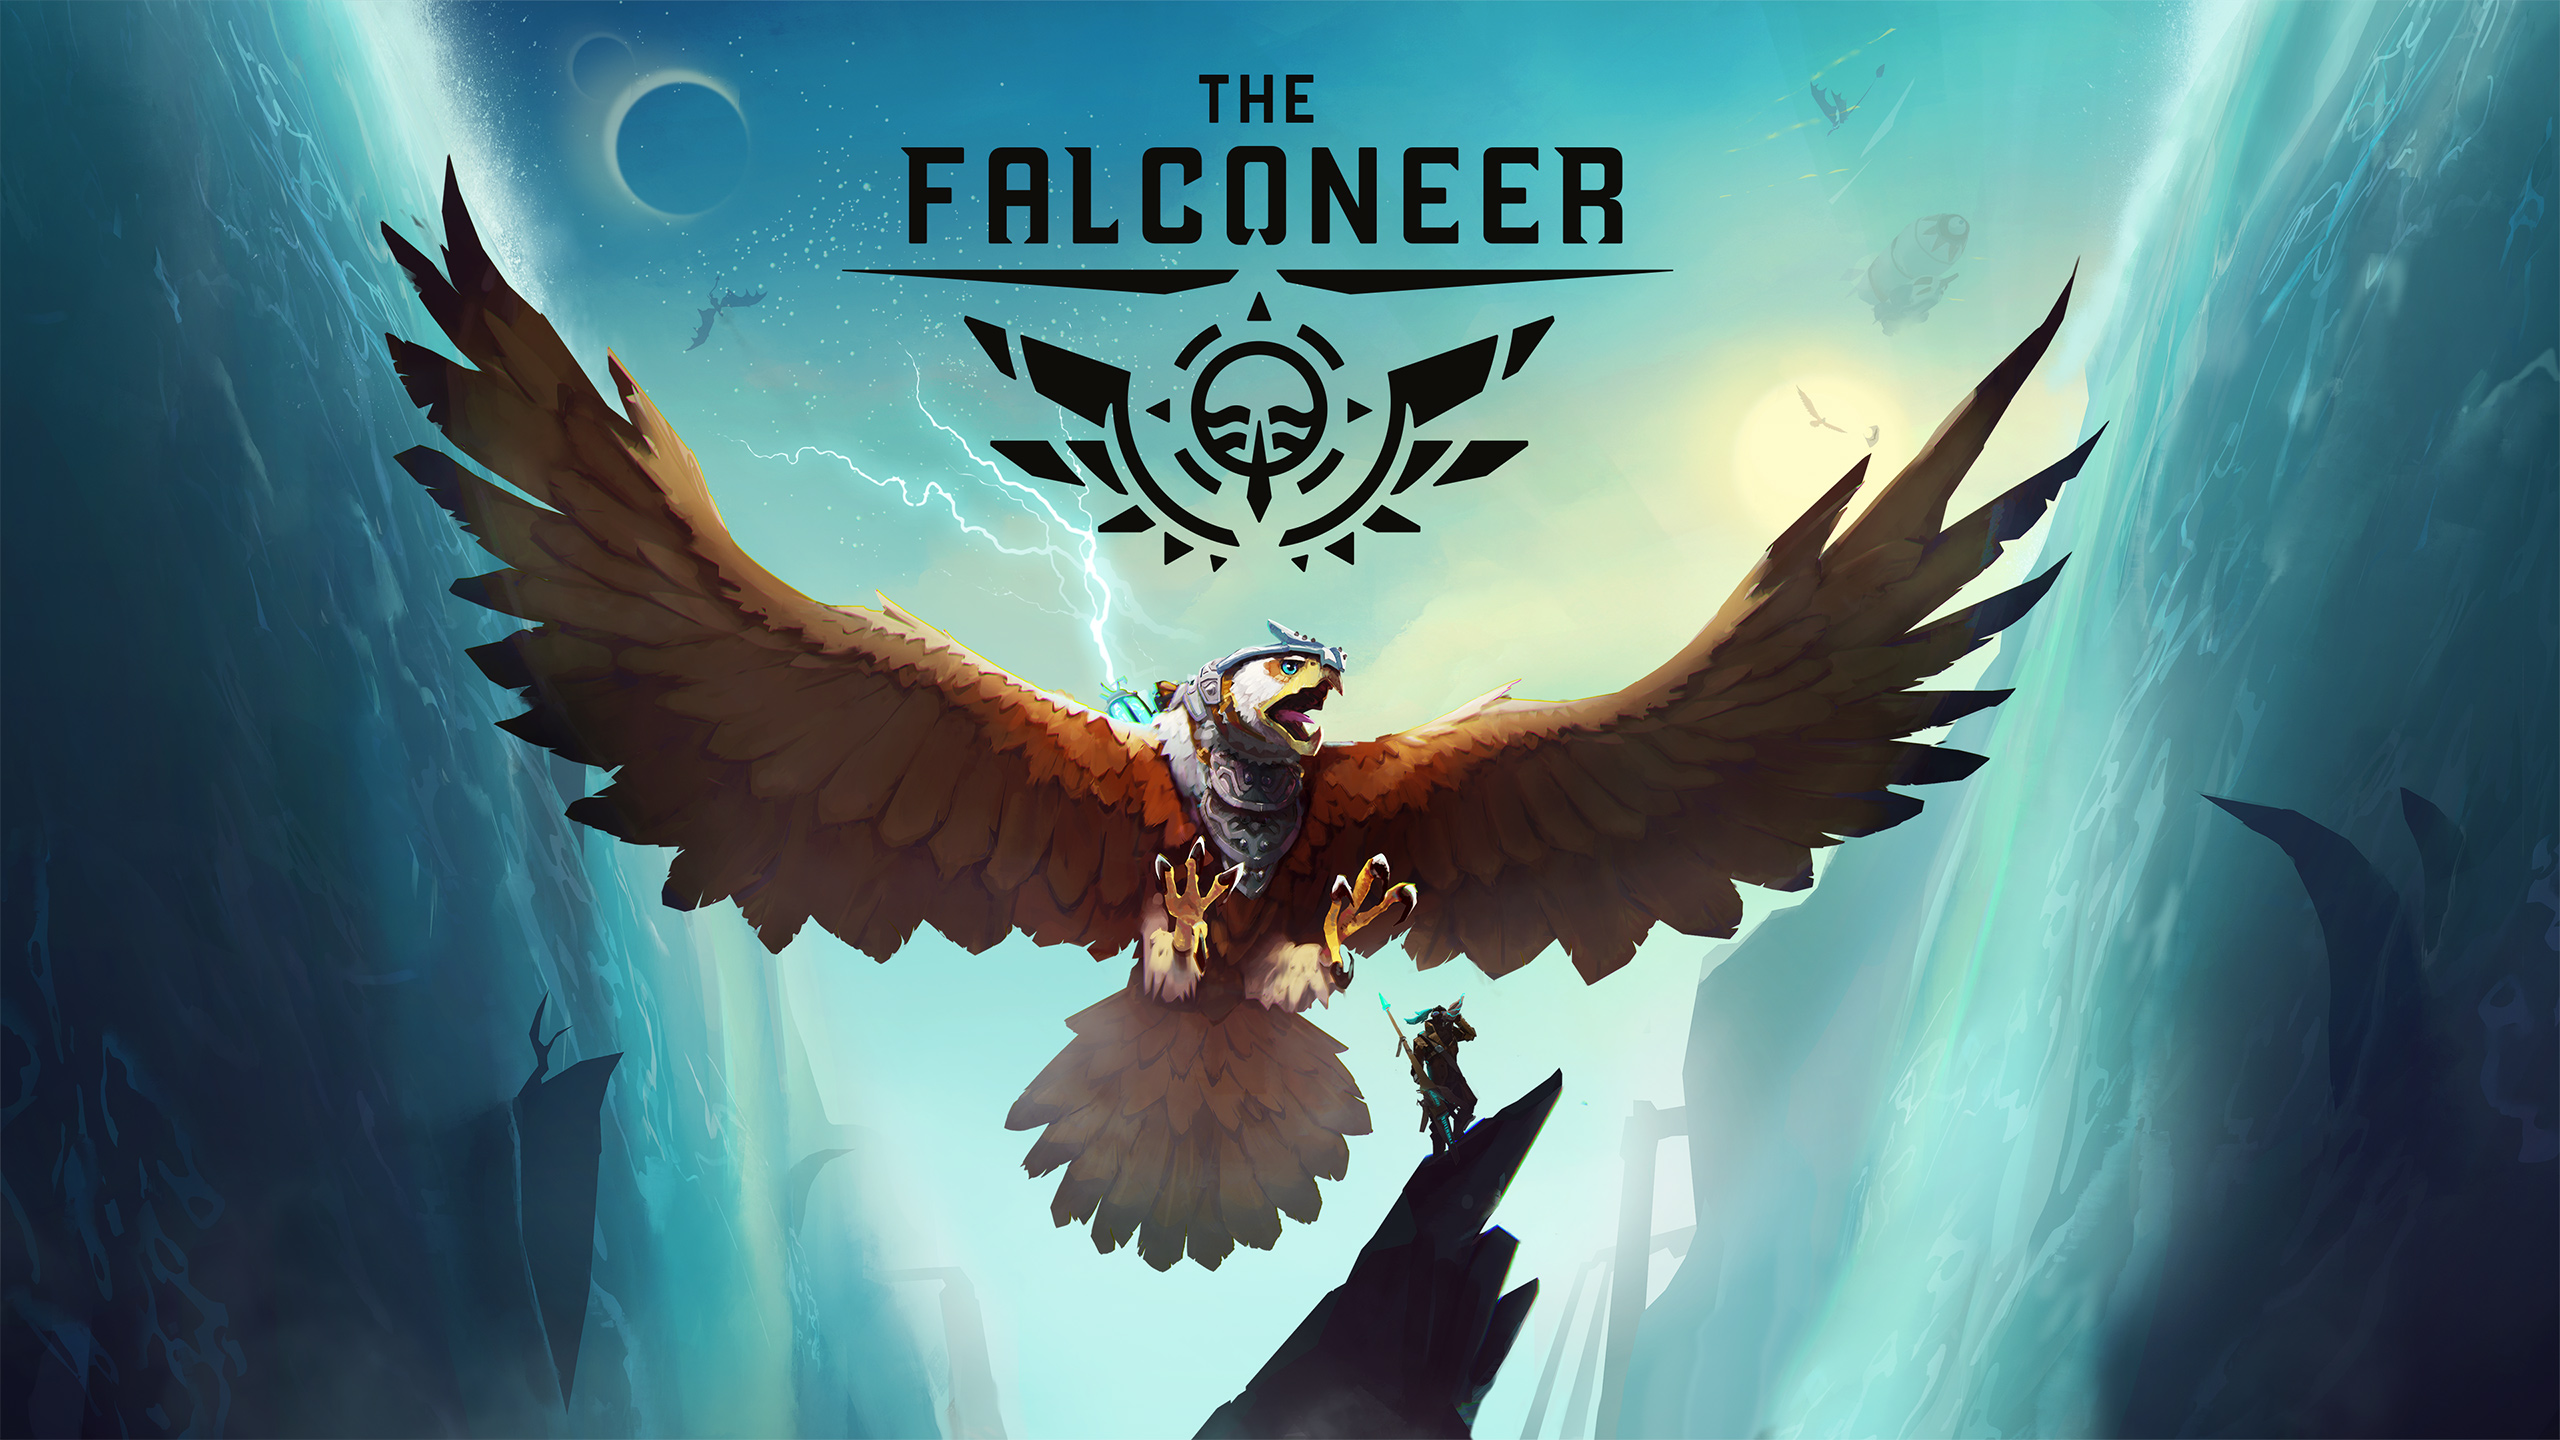 350 TL’lik Savaş Oyunu The Falconeer, Epic Games’te Ücretsiz Oldu!